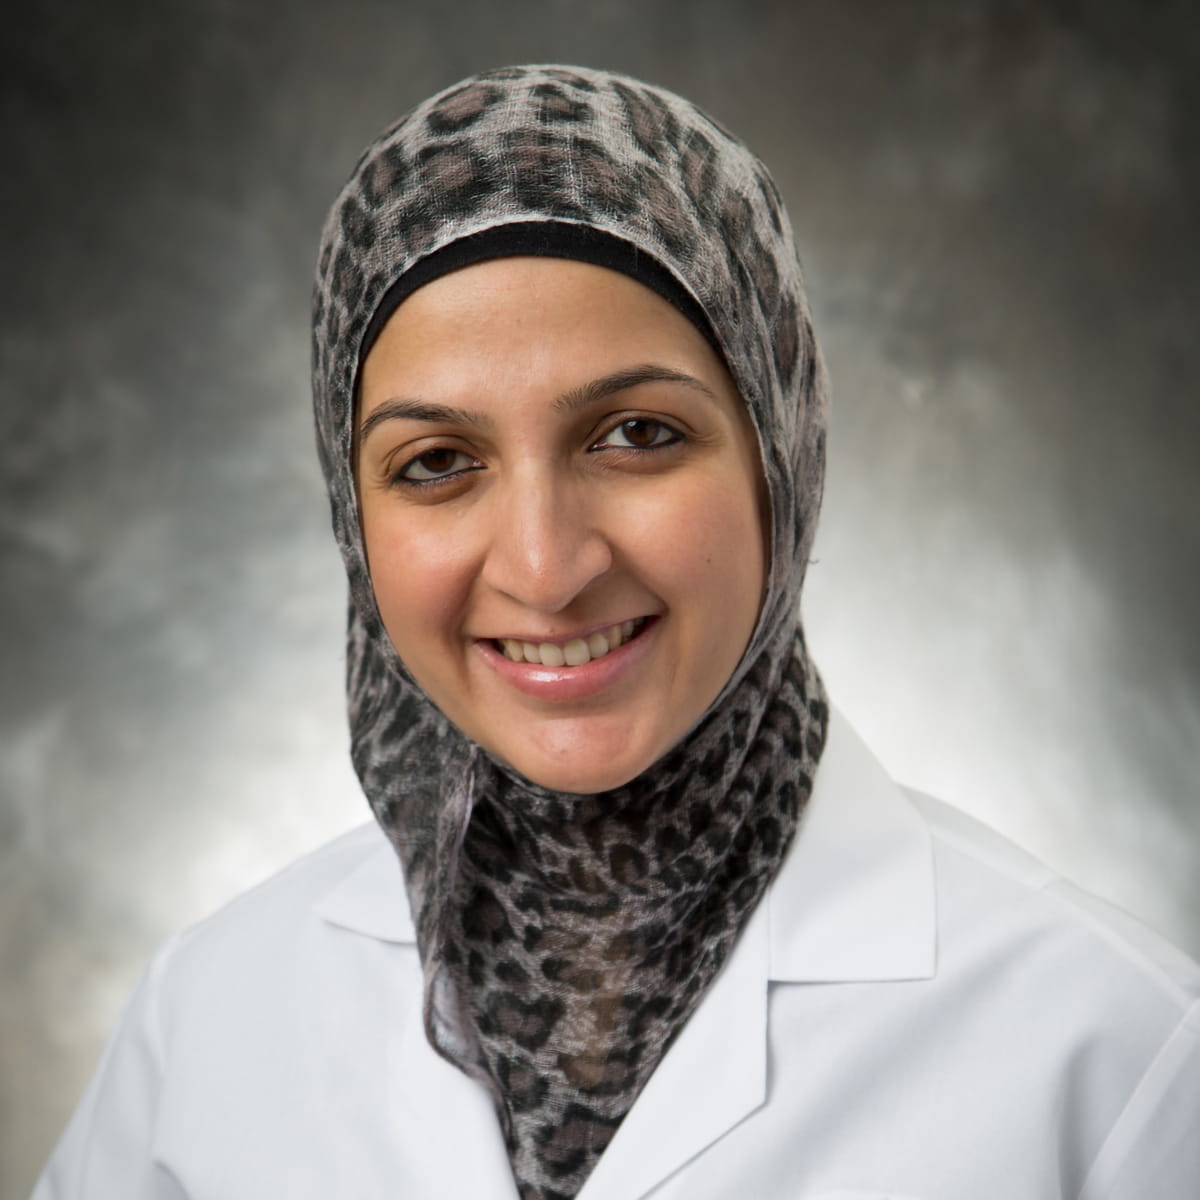 A friendly headshot of Saira Adeel, MD